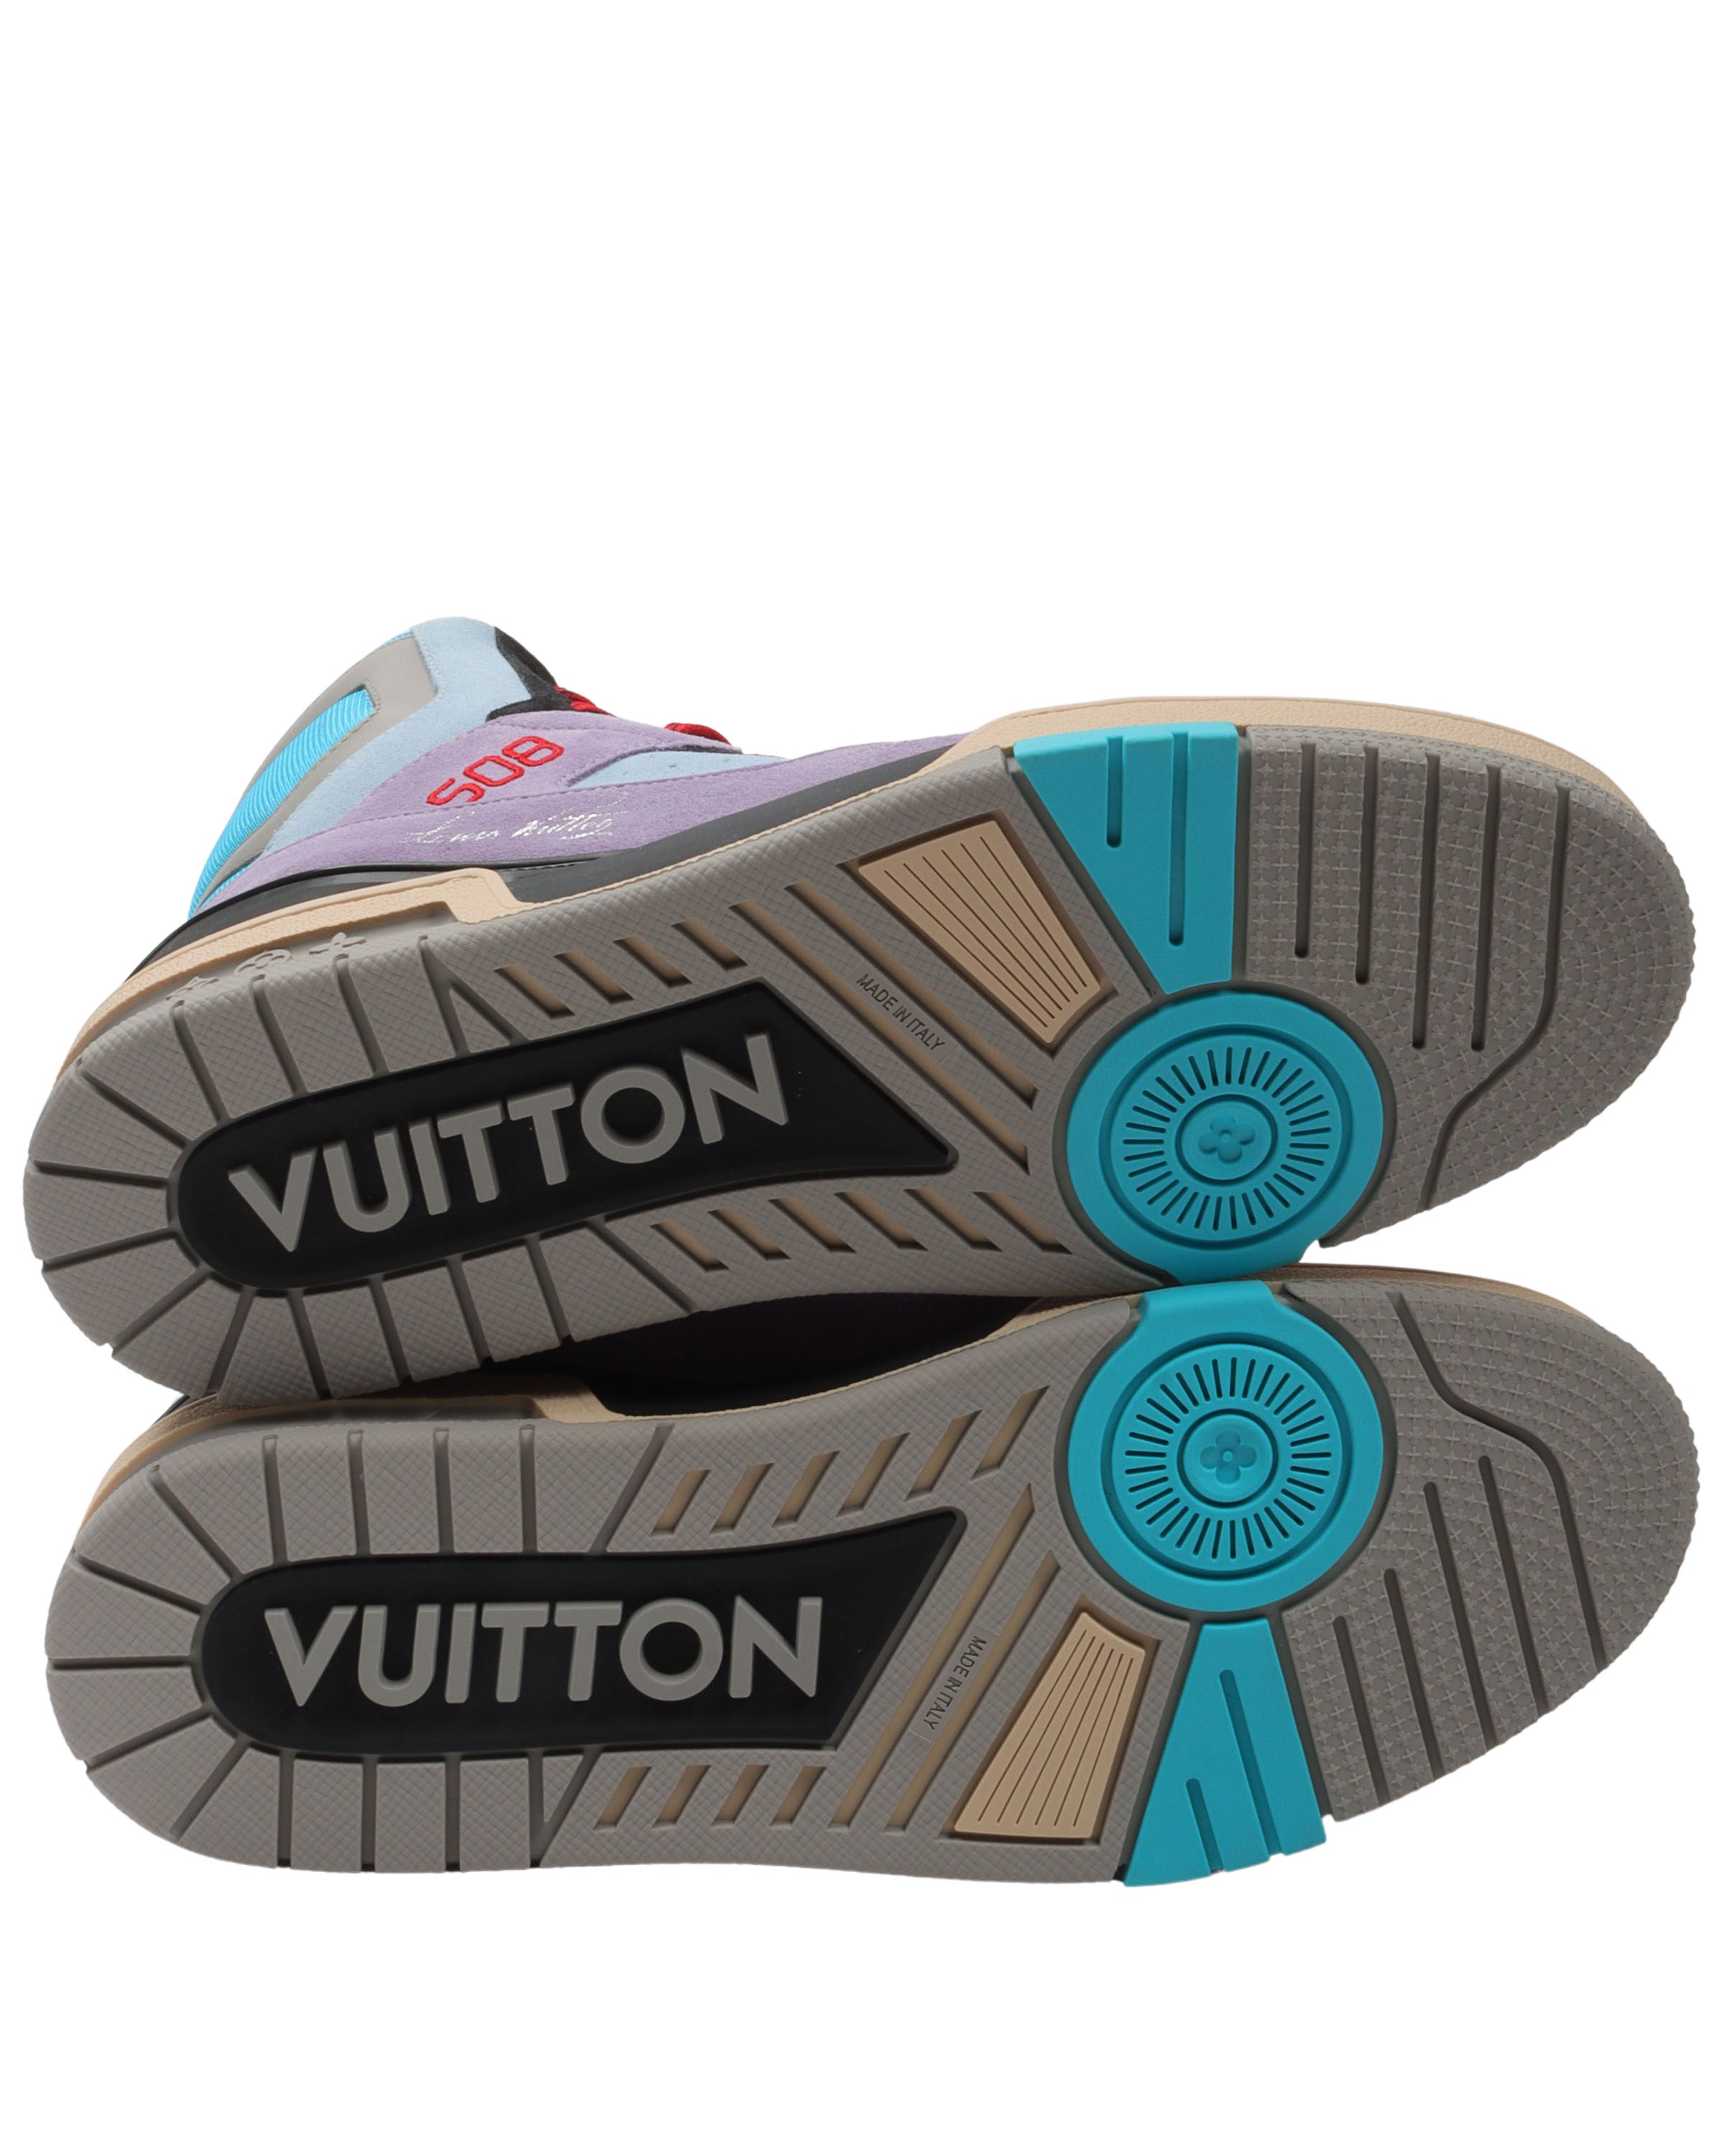 Louis Vuitton x Virgil Trainer 508 Sneaker Boot 2020 1A7R0R size LV 8.5